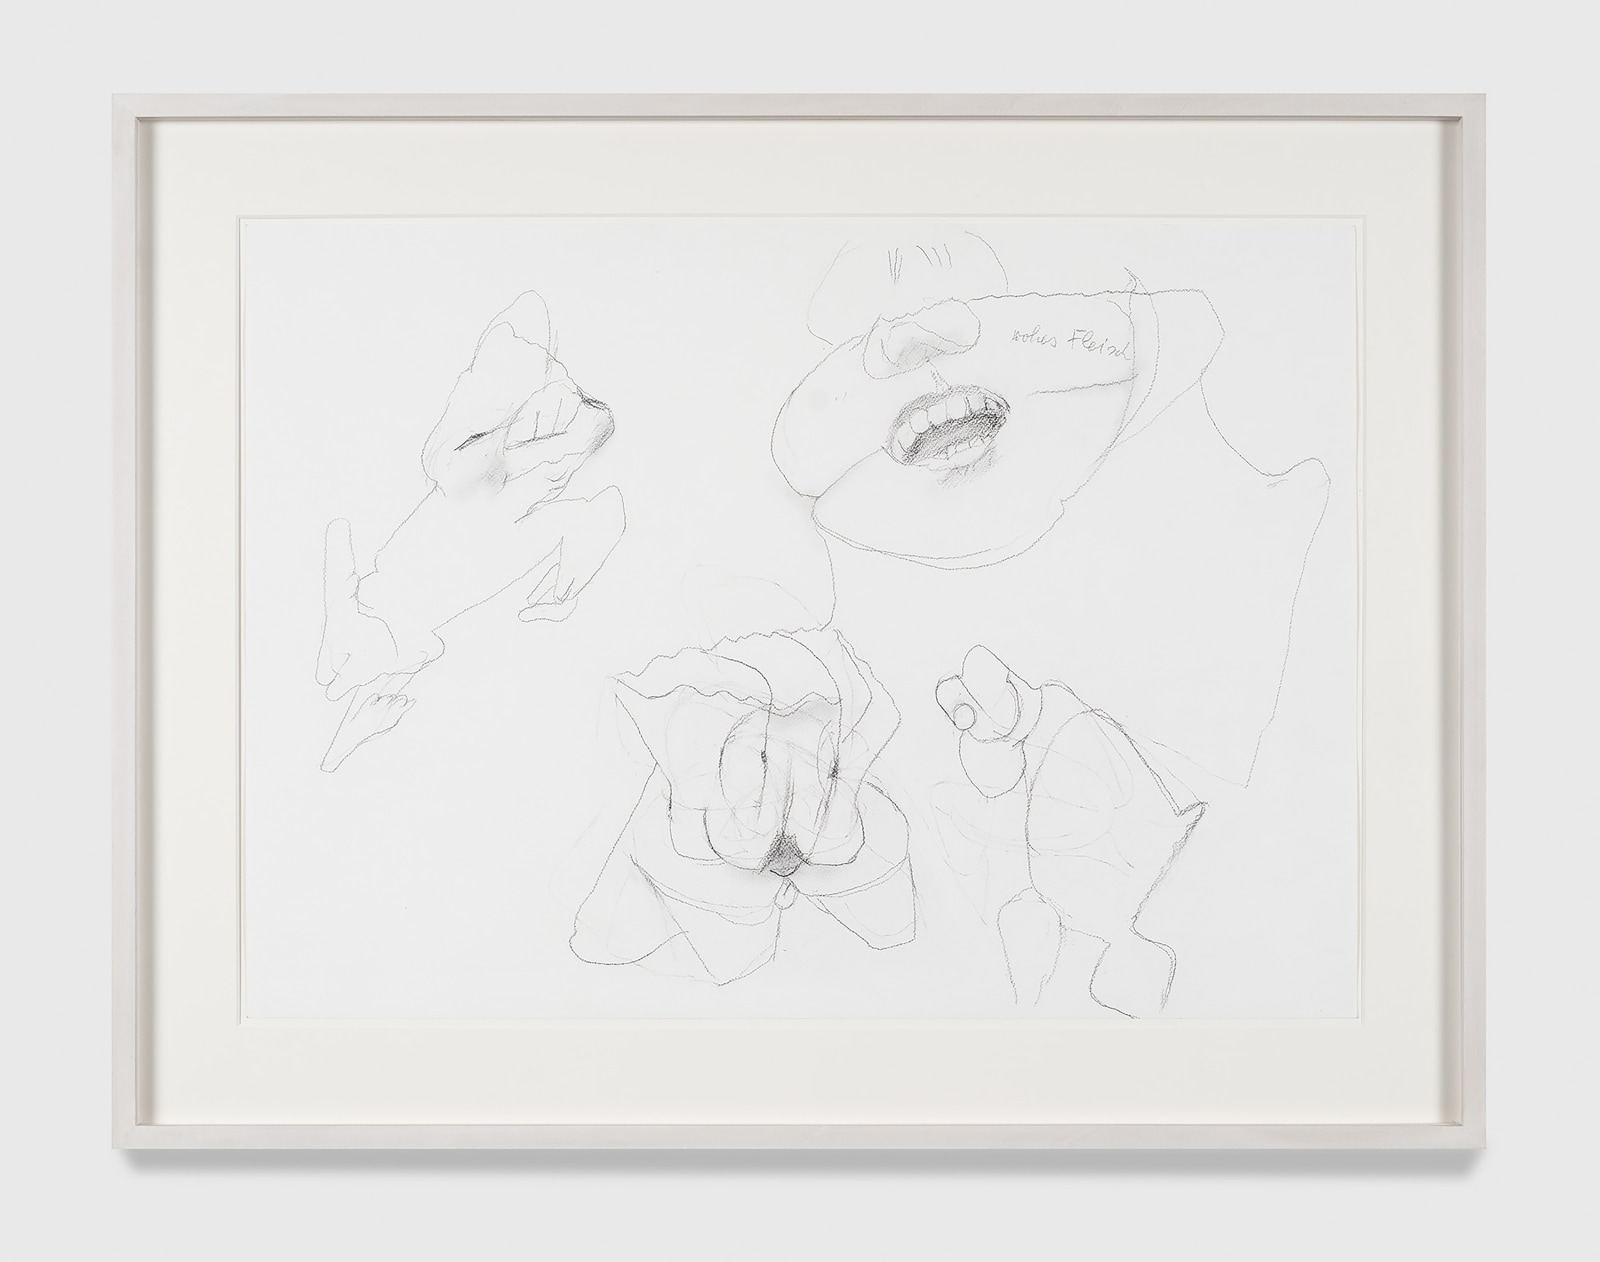 Maria Lassnig, Untitled, ca. 2000 - 2009